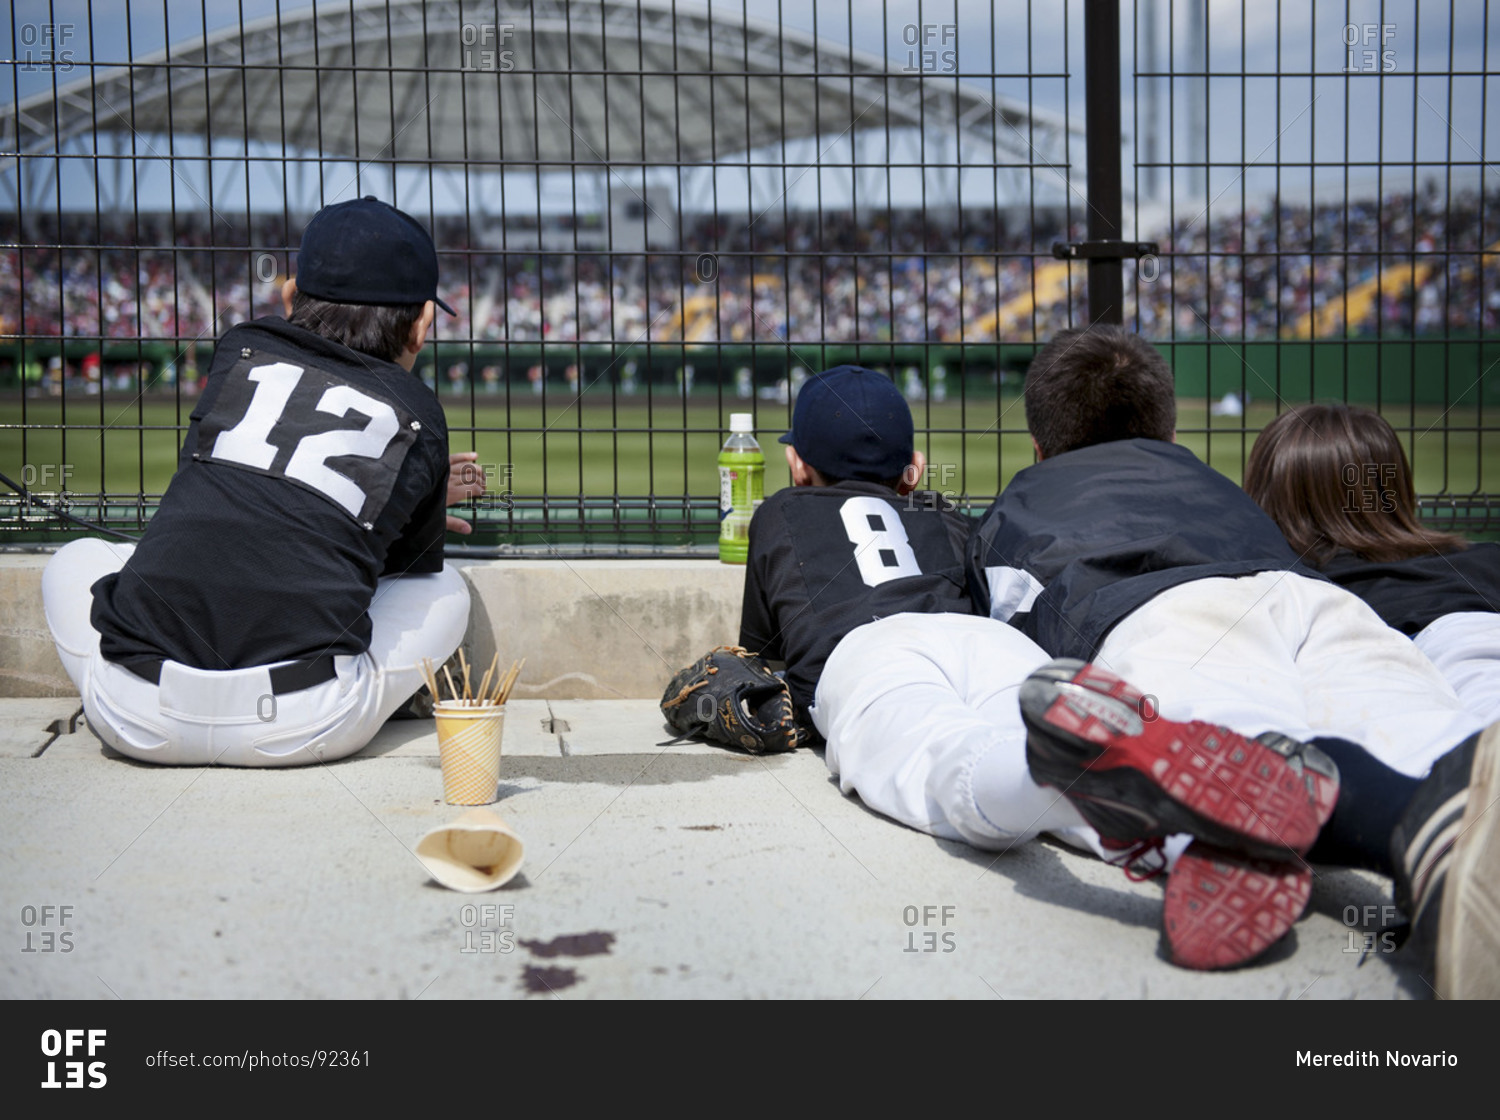 Children watching a game at a baseball field